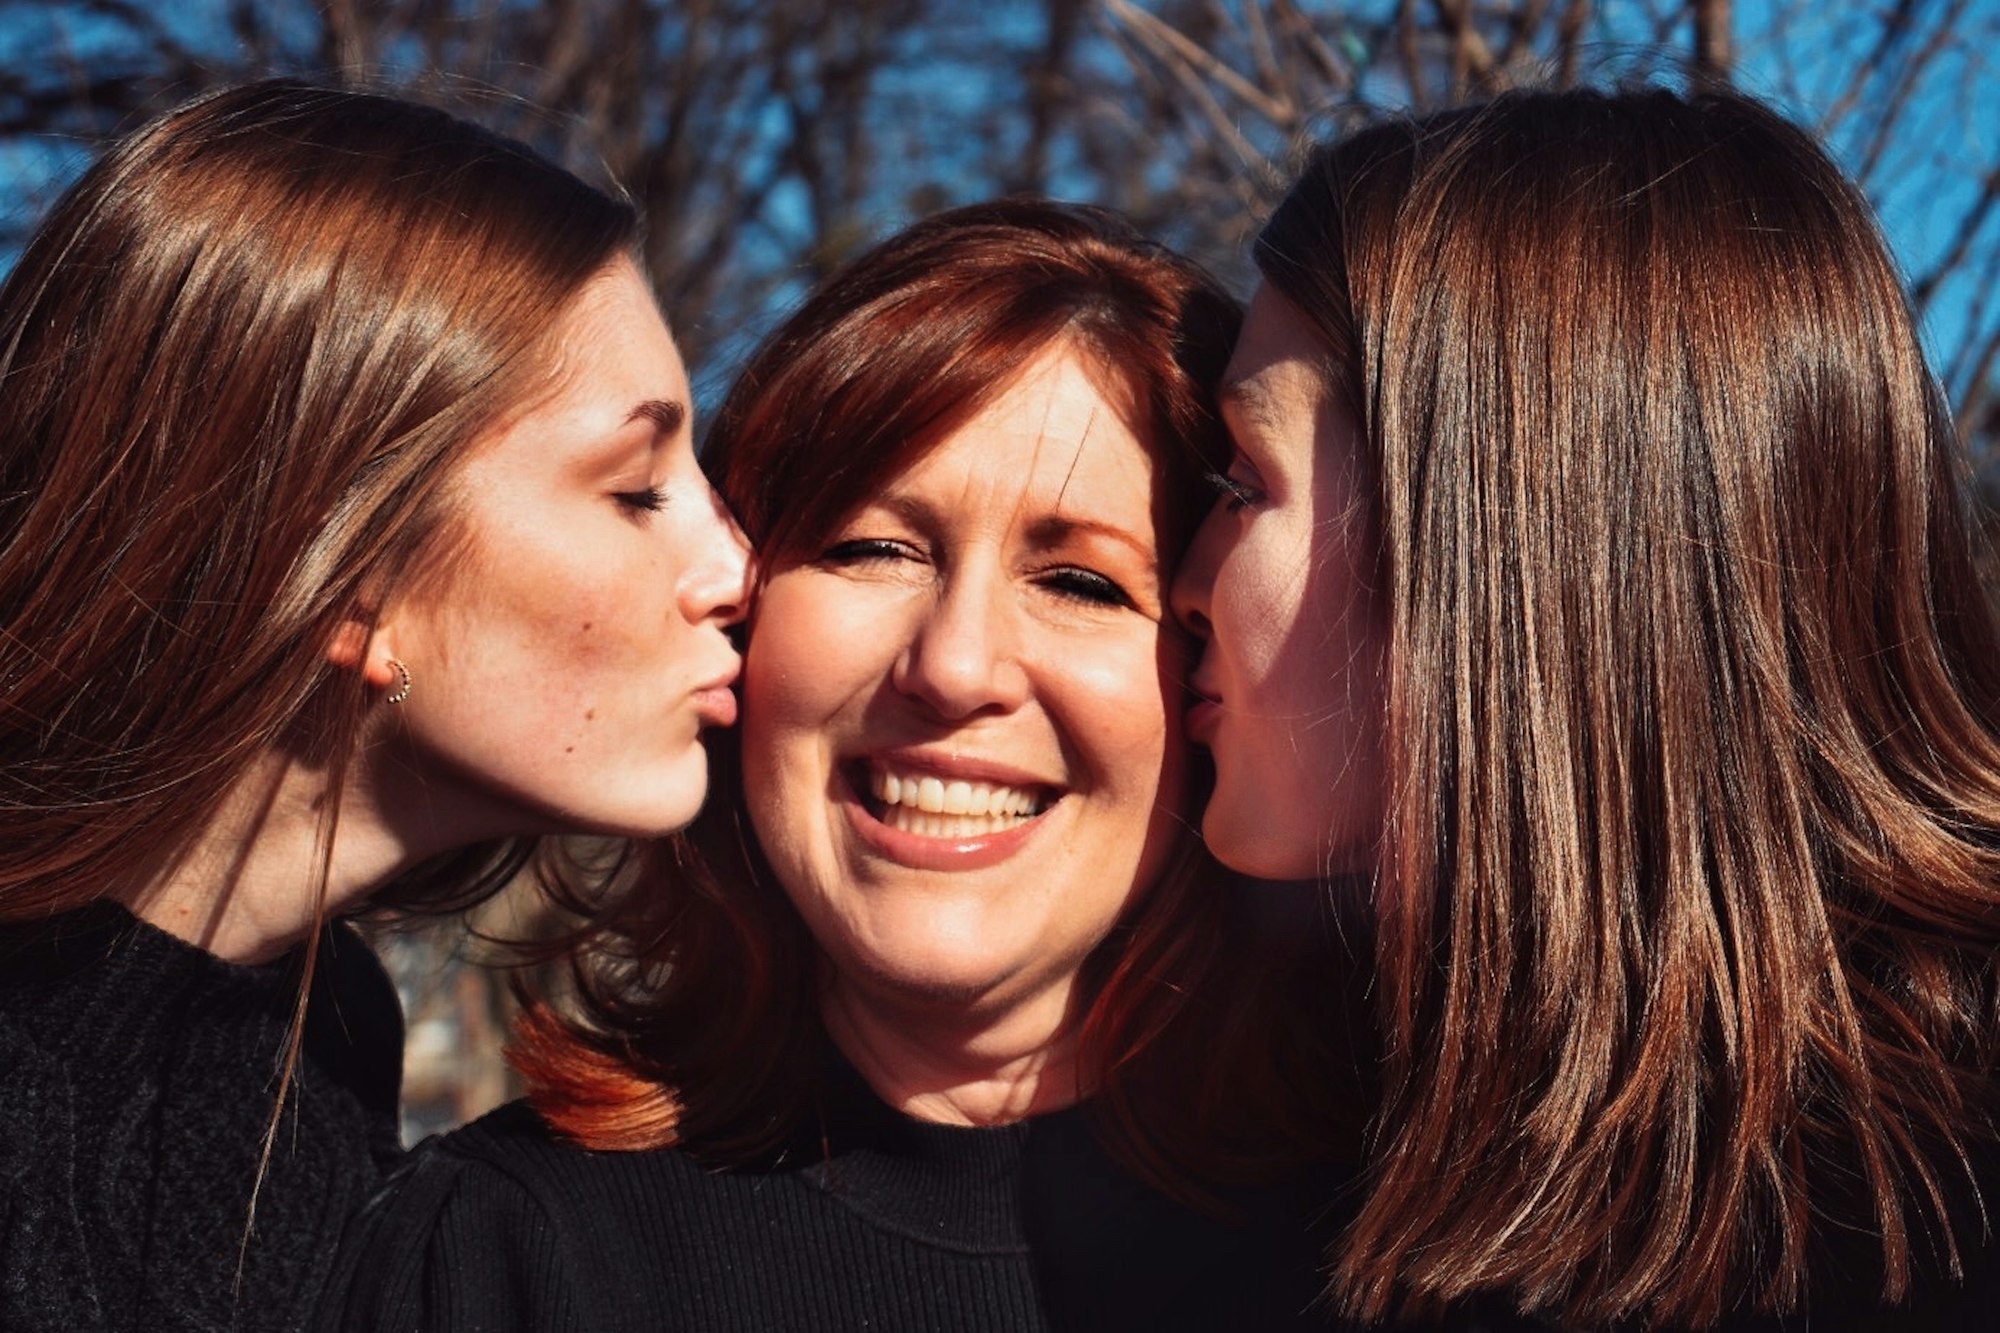 8 Unique Mother's Day Photoshoot Ideas to Capture Unforgettable Memories